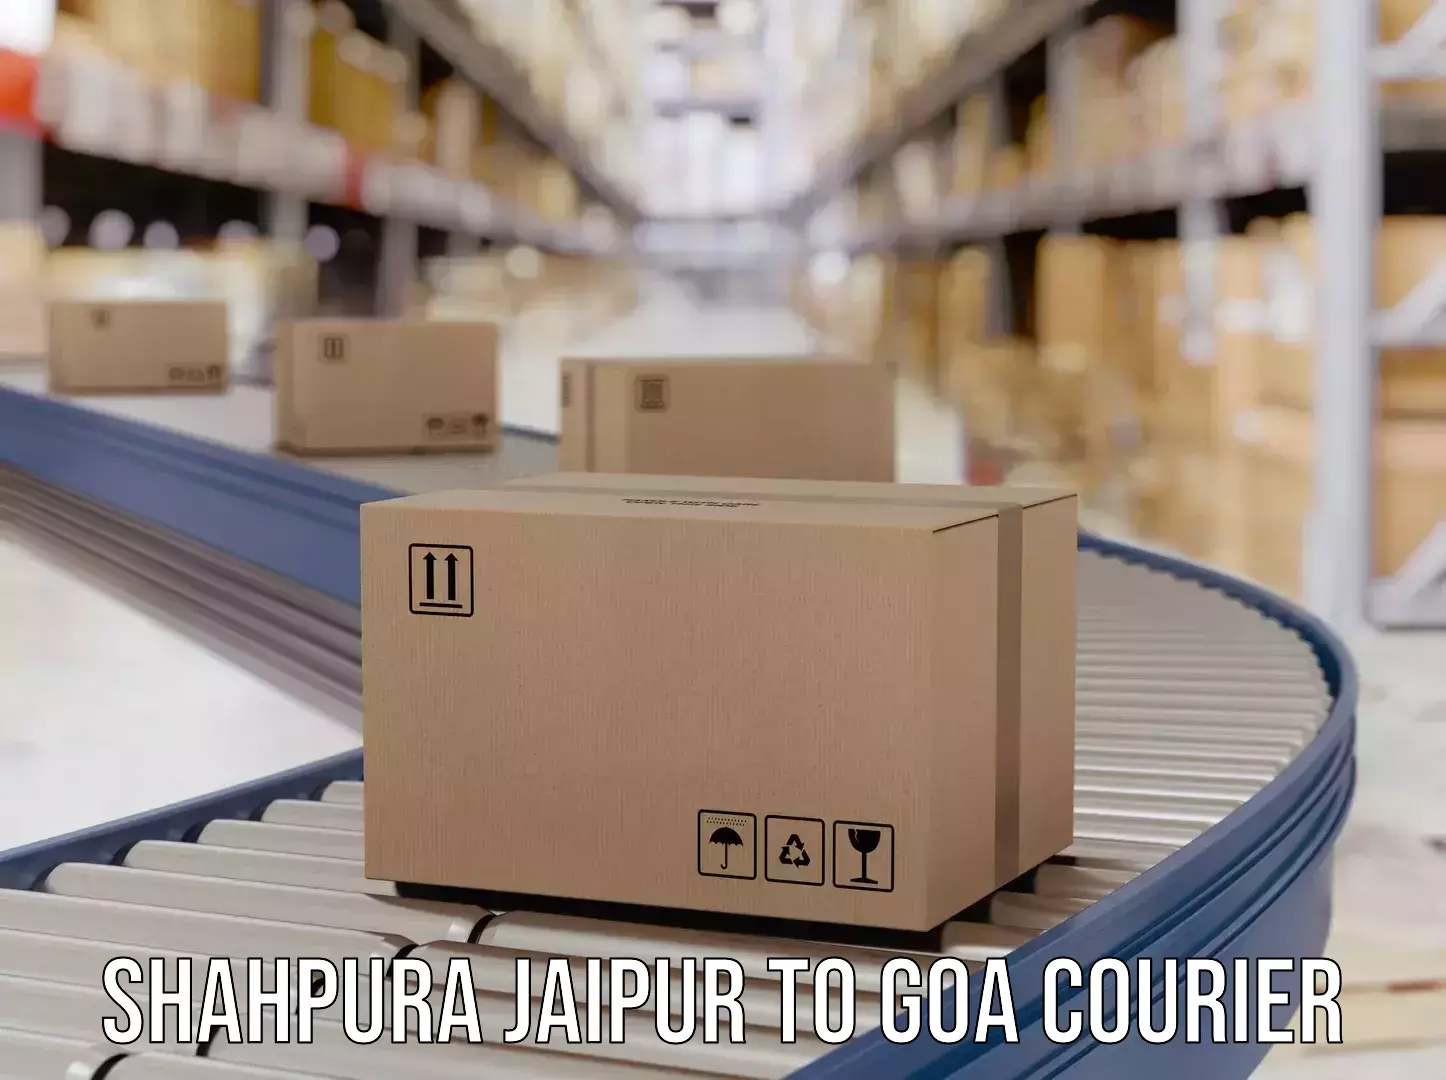 Courier service innovation Shahpura Jaipur to Margao